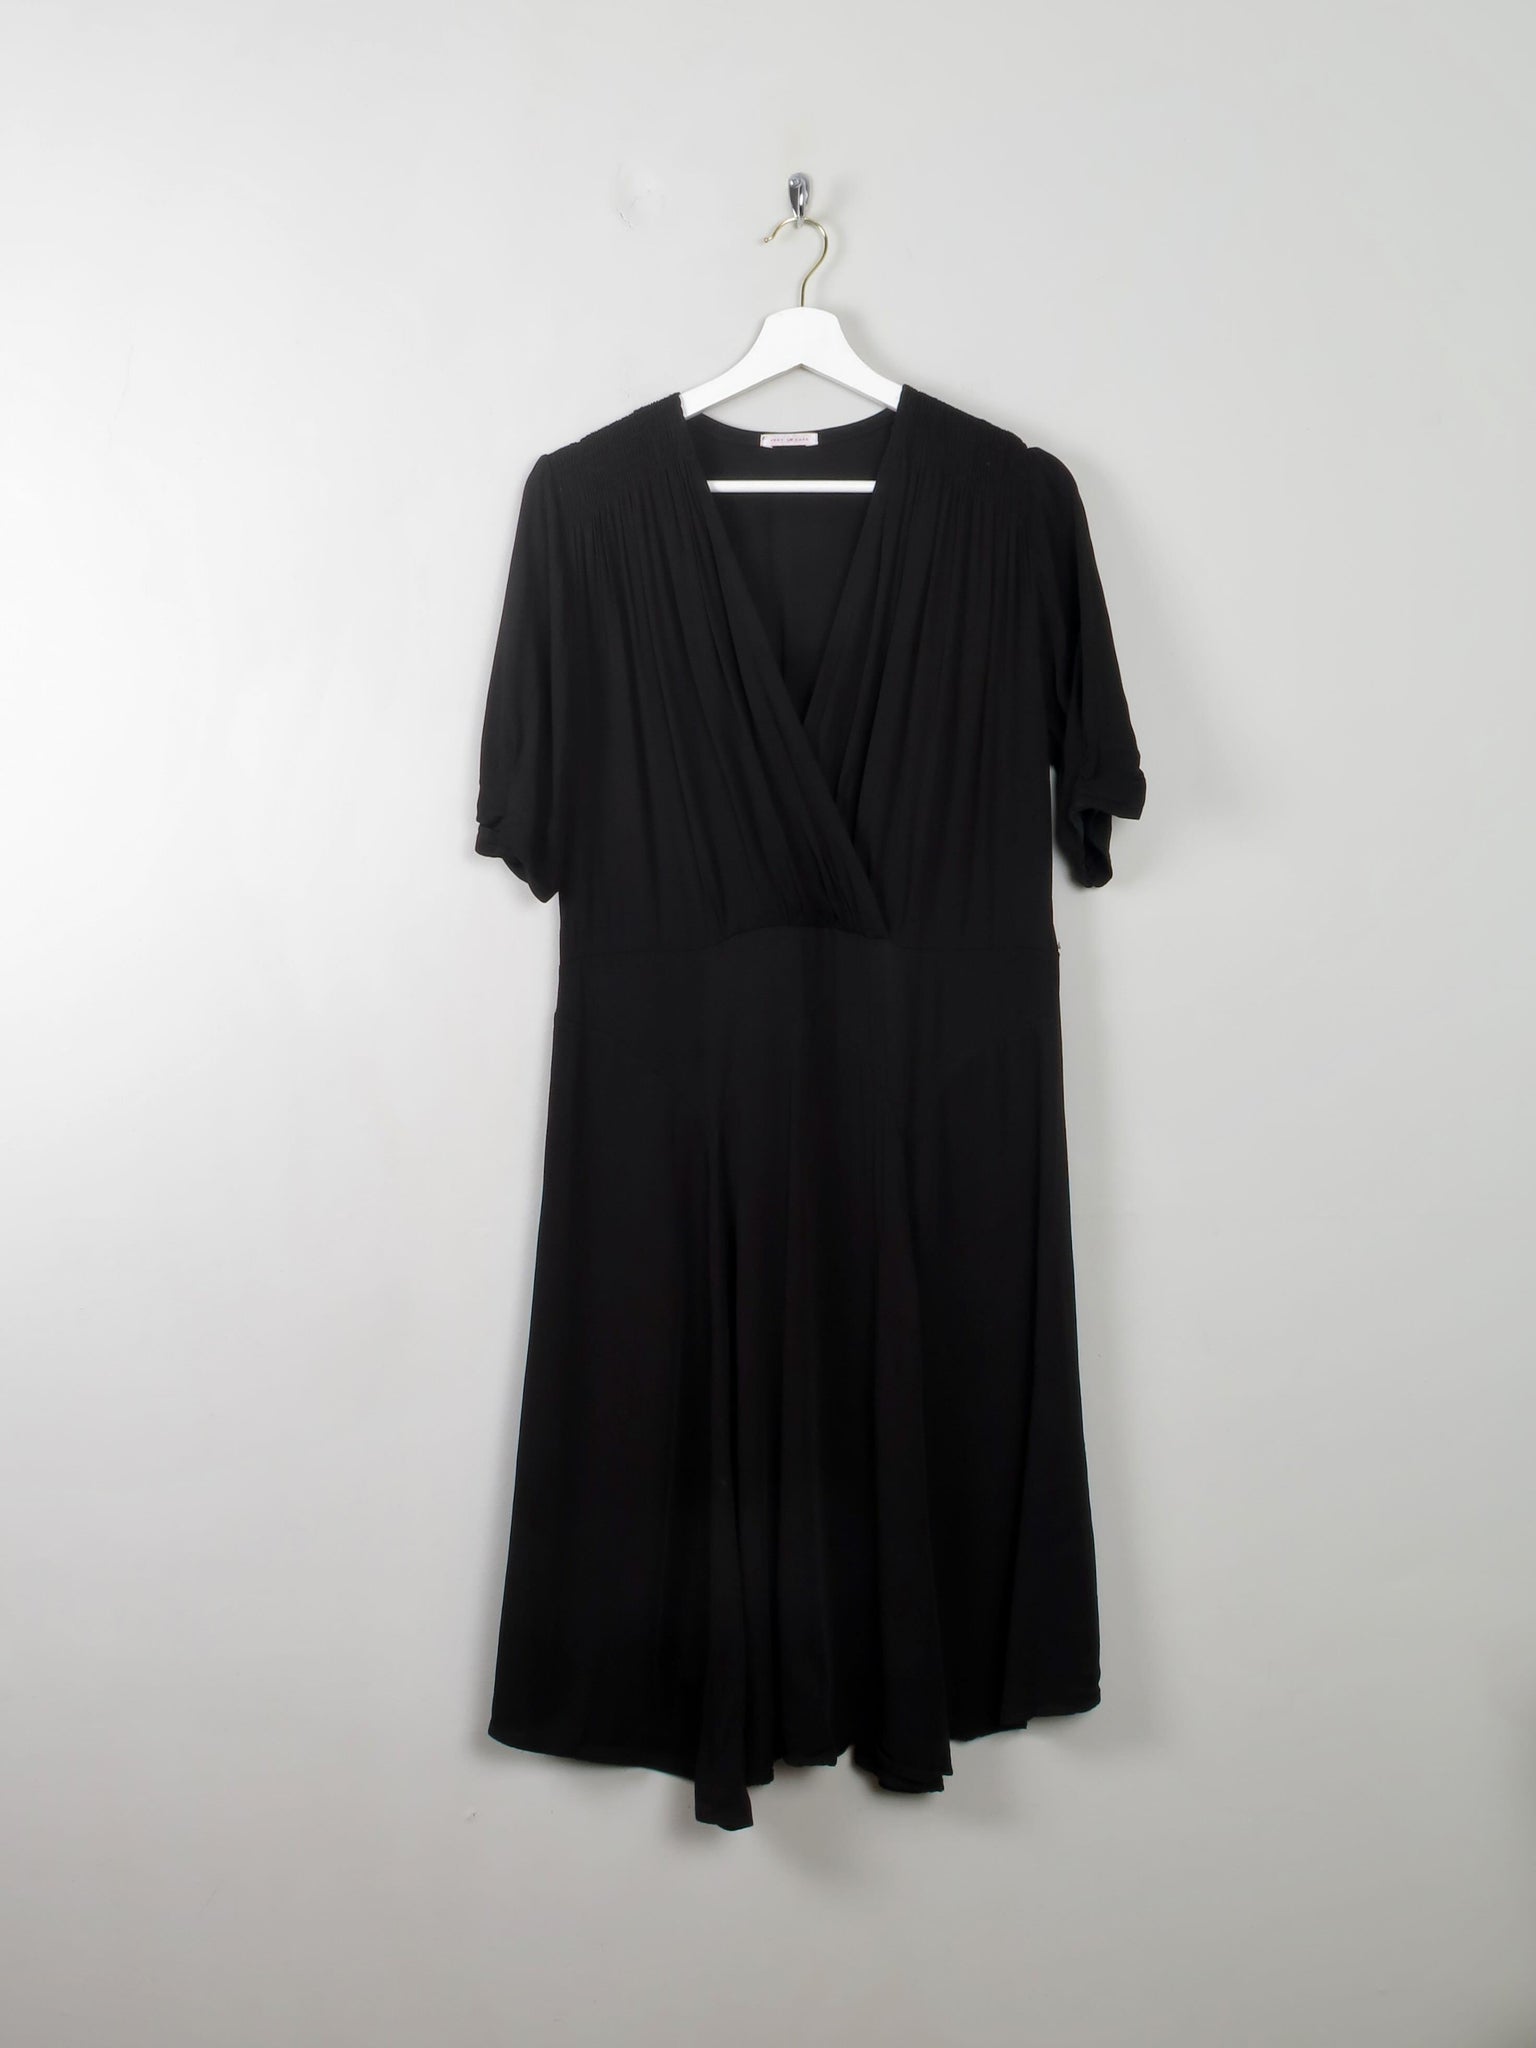 Vintage 1940s  Style Black Dress Just In Case L - The Harlequin